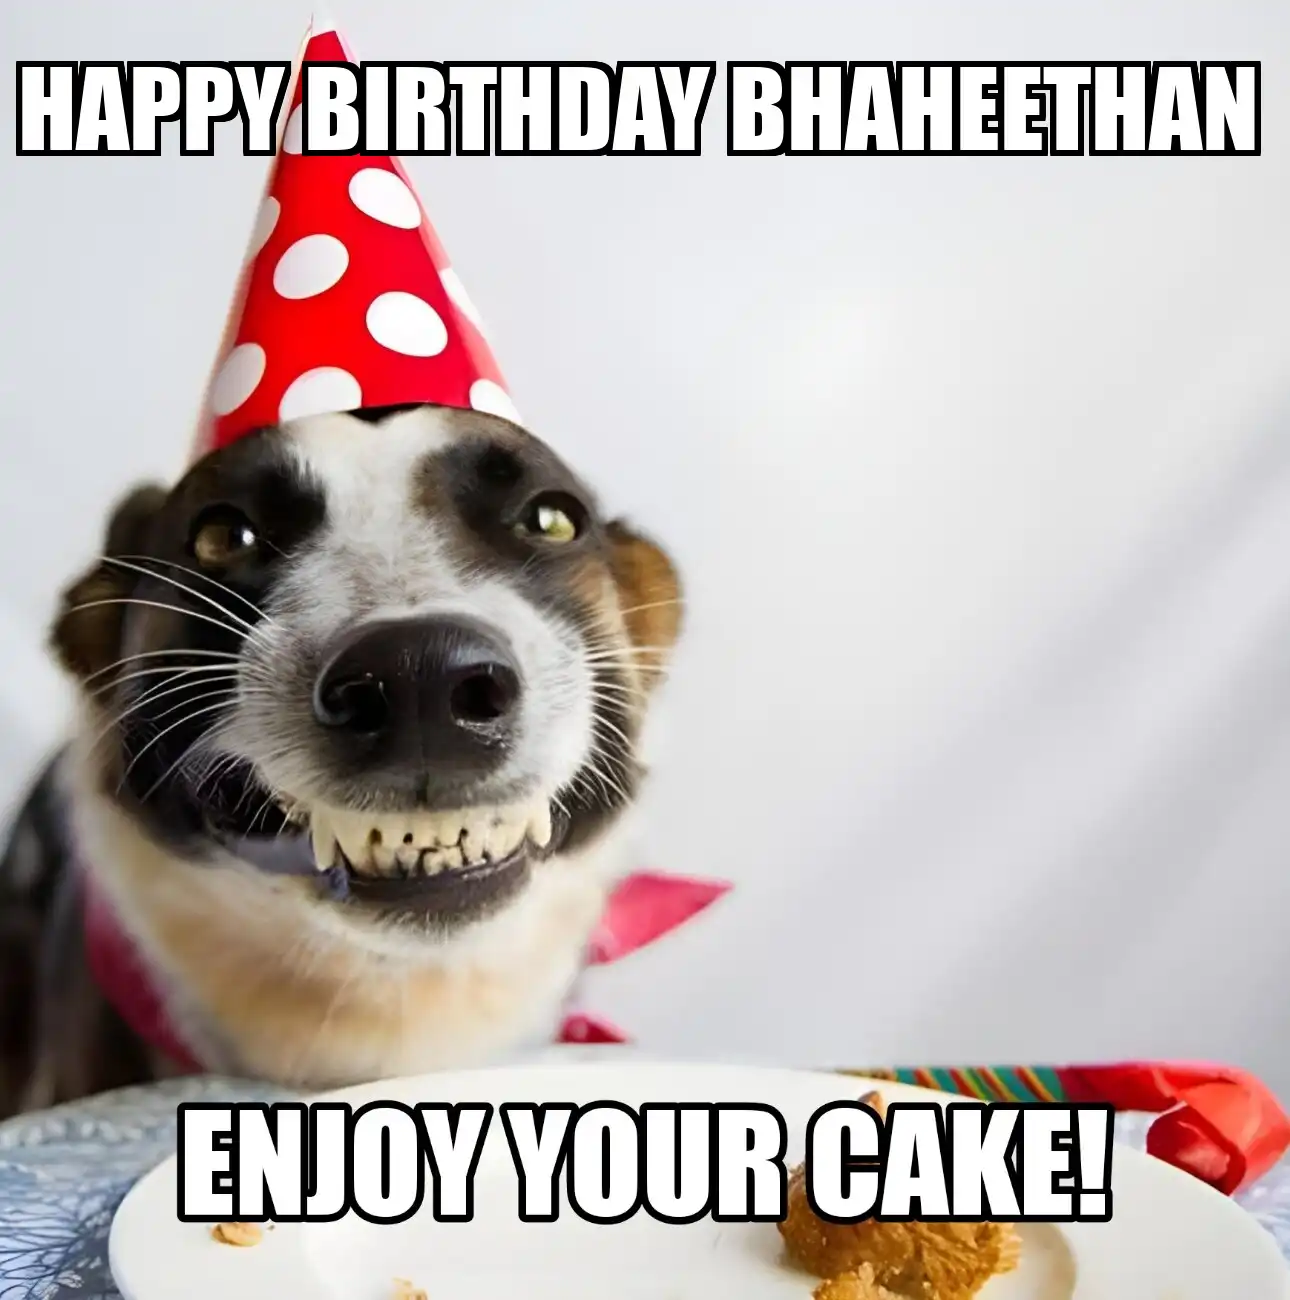 Happy Birthday Bhaheethan Enjoy Your Cake Dog Meme